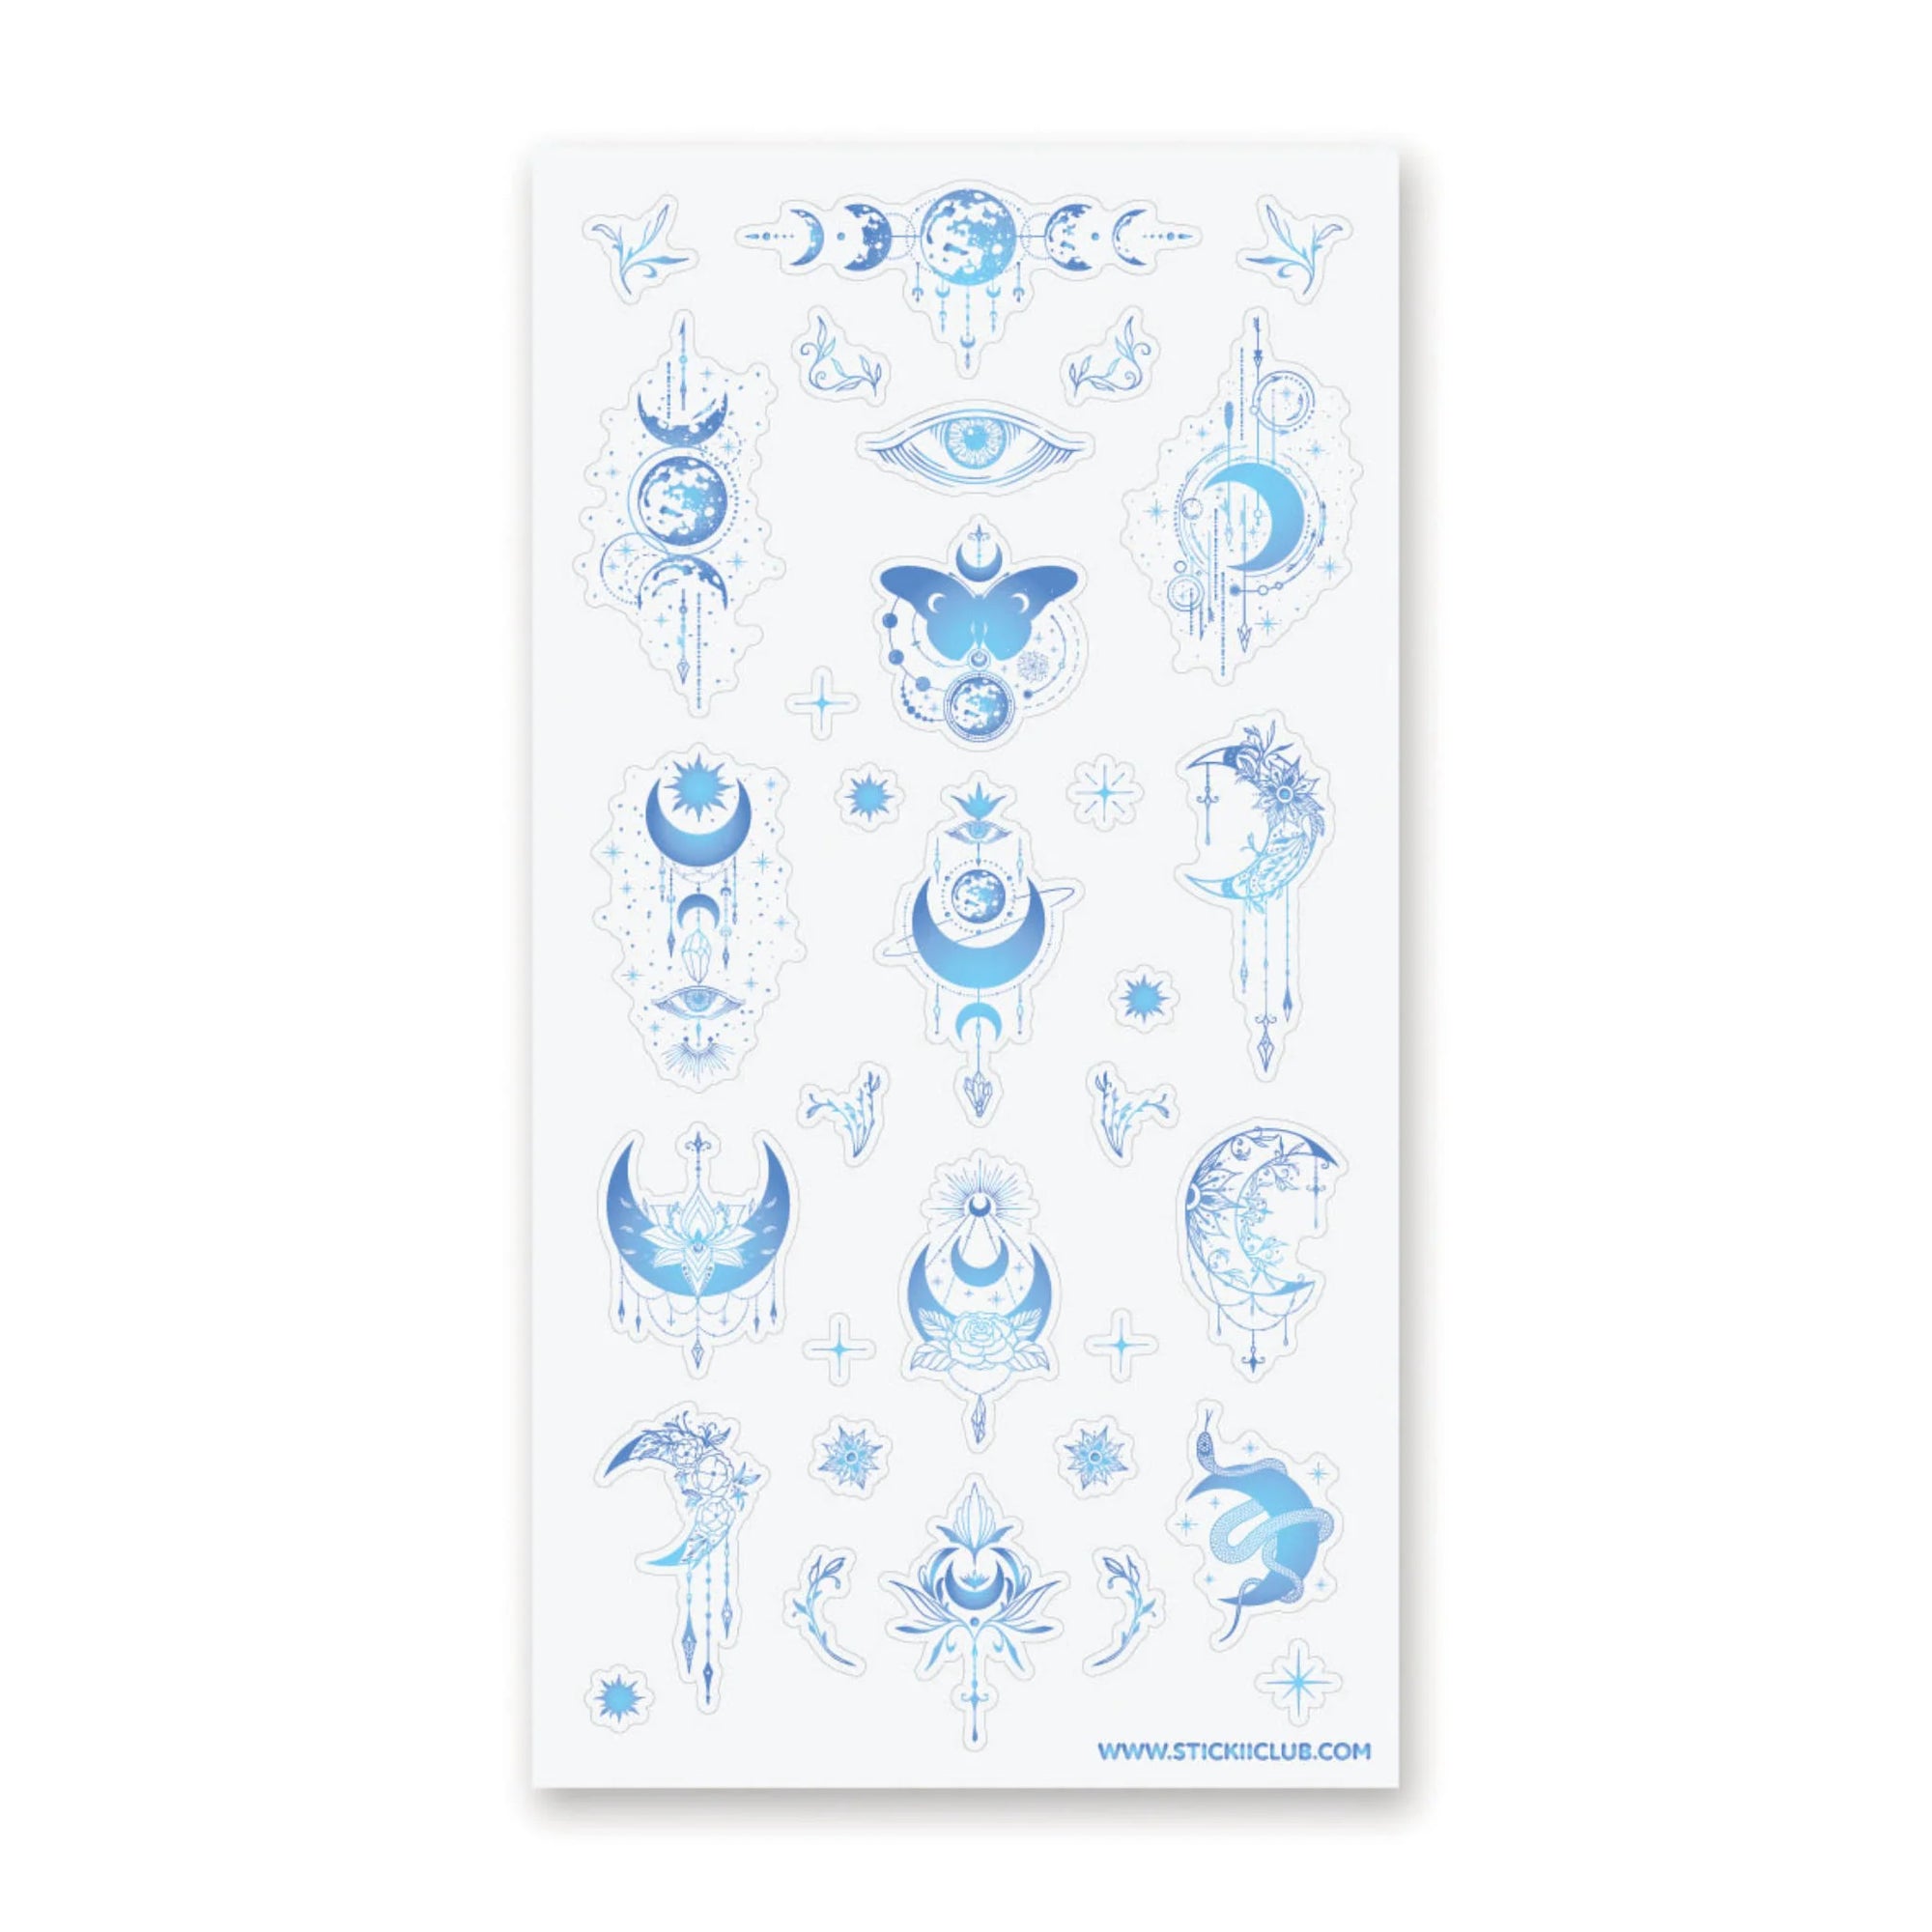 Holo Moons Sticker Sheet